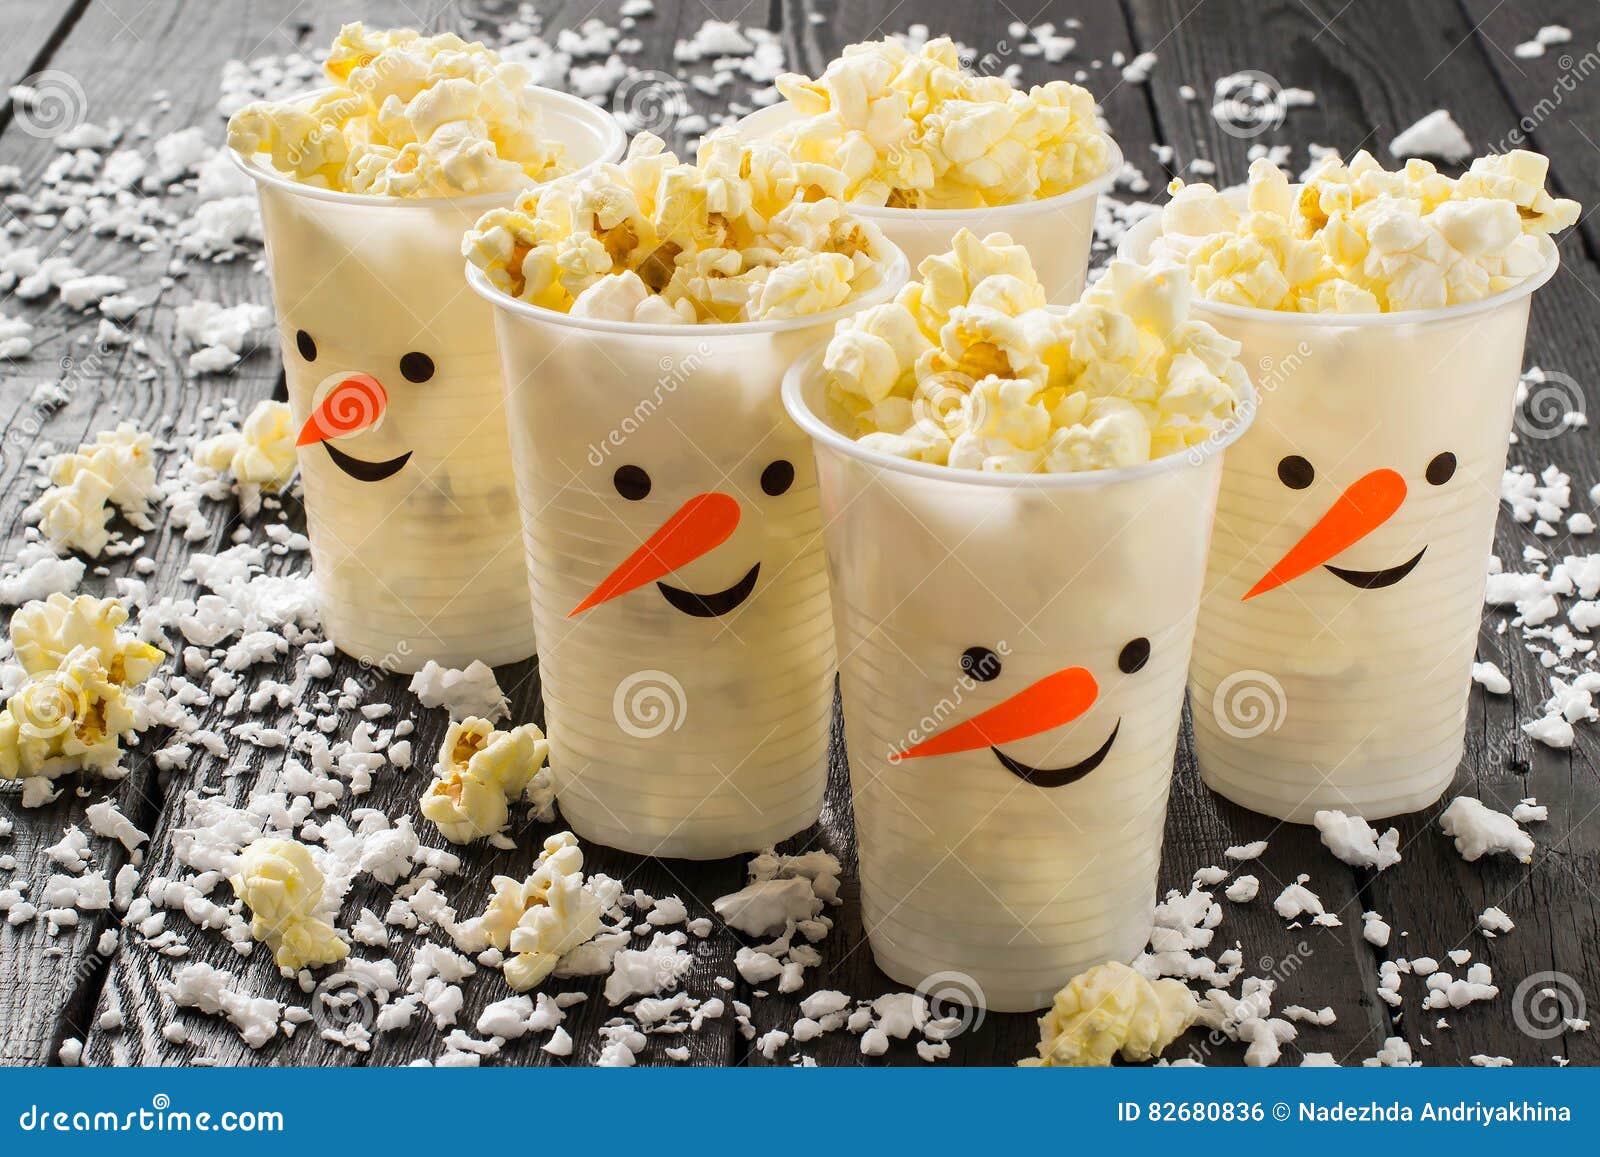 https://thumbs.dreamstime.com/z/plastic-cups-form-snowmen-popcorn-homemade-applique-idea-christmas-party-diy-concept-82680836.jpg